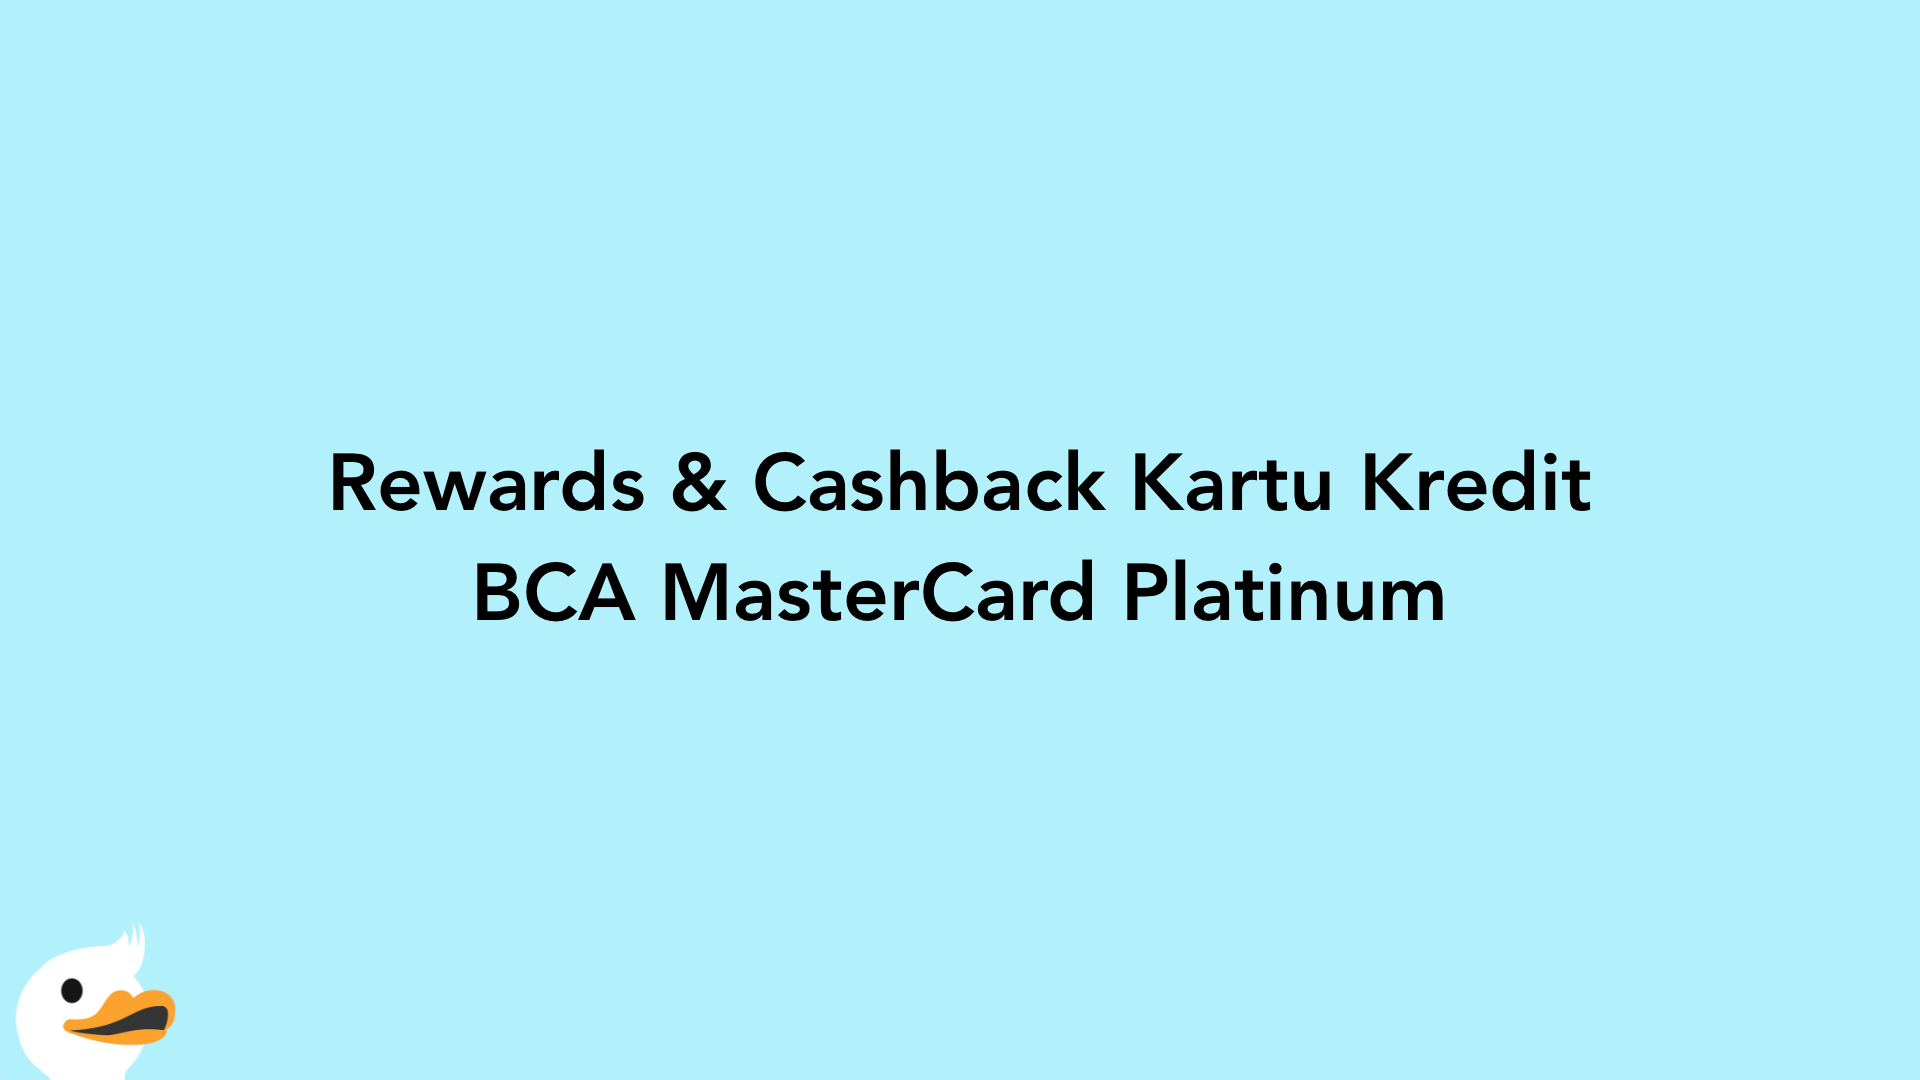 Rewards & Cashback Kartu Kredit BCA MasterCard Platinum